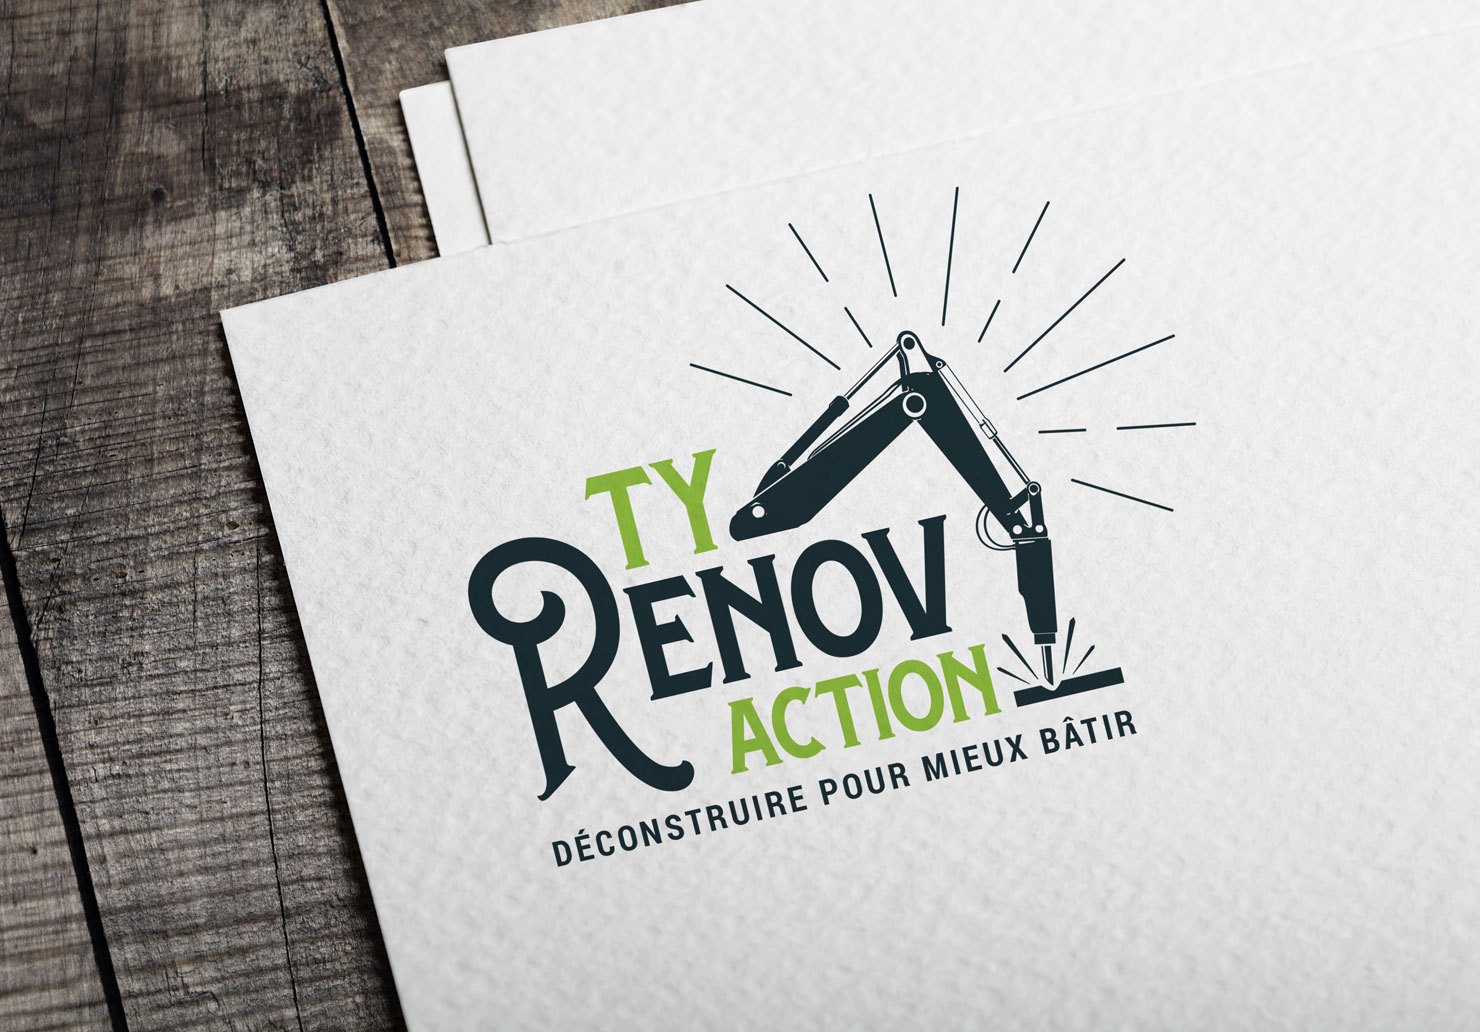 TyRenovAction_Logo